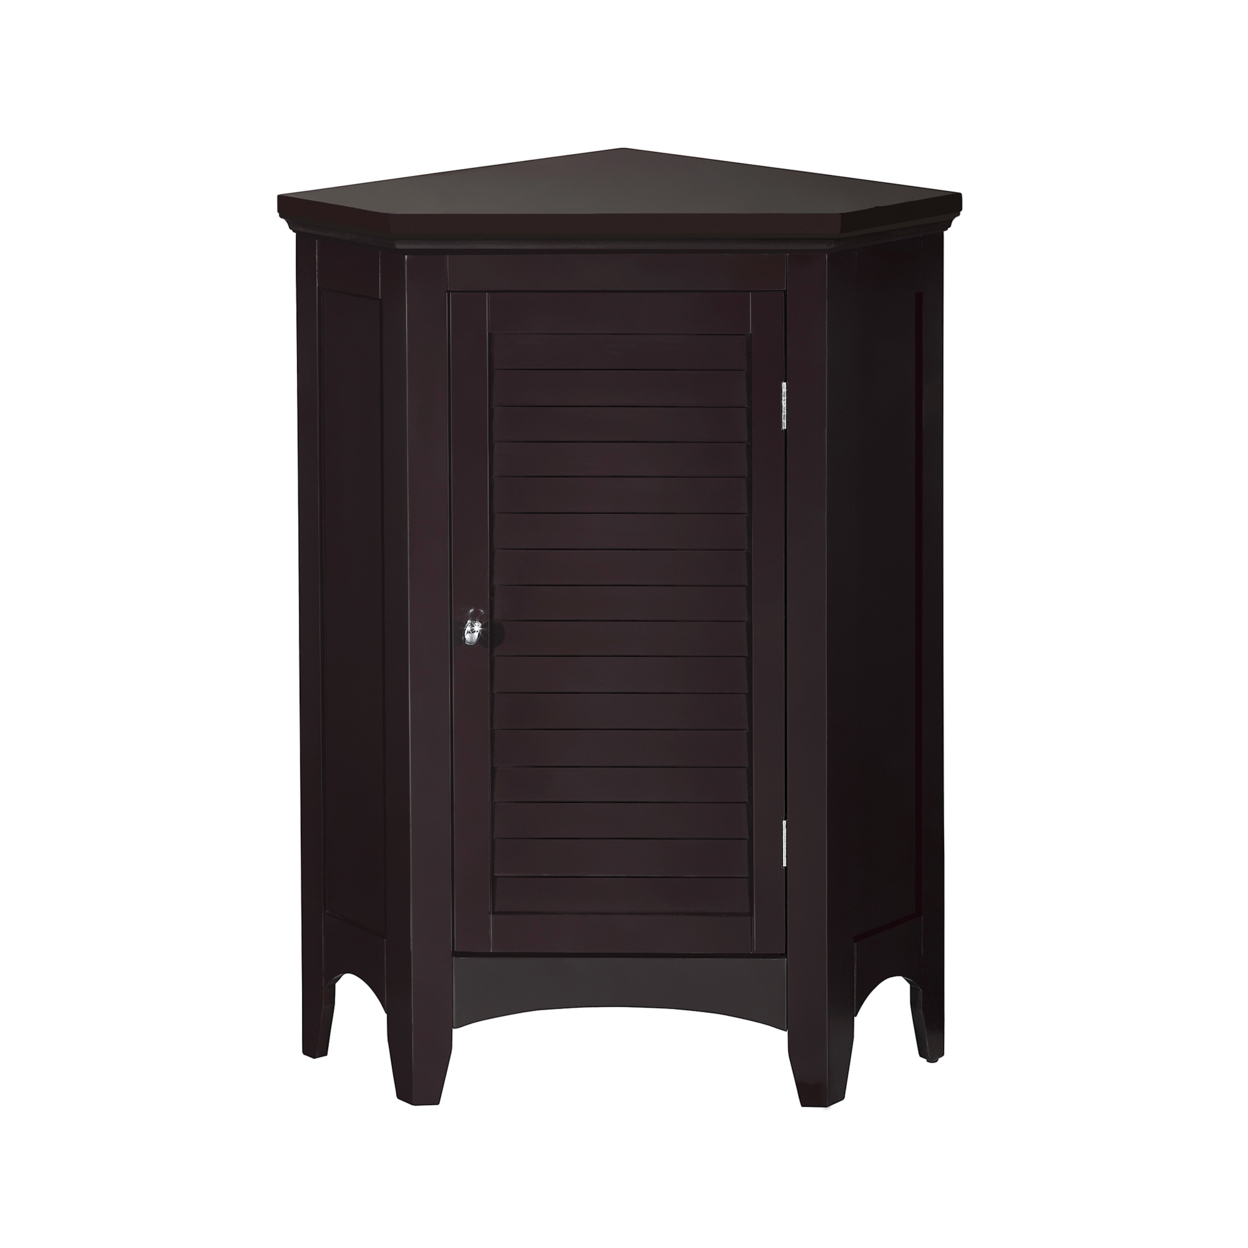 Elegant Home Fashions Wooden Bathroom Corner Cabinet Brown ELG-596